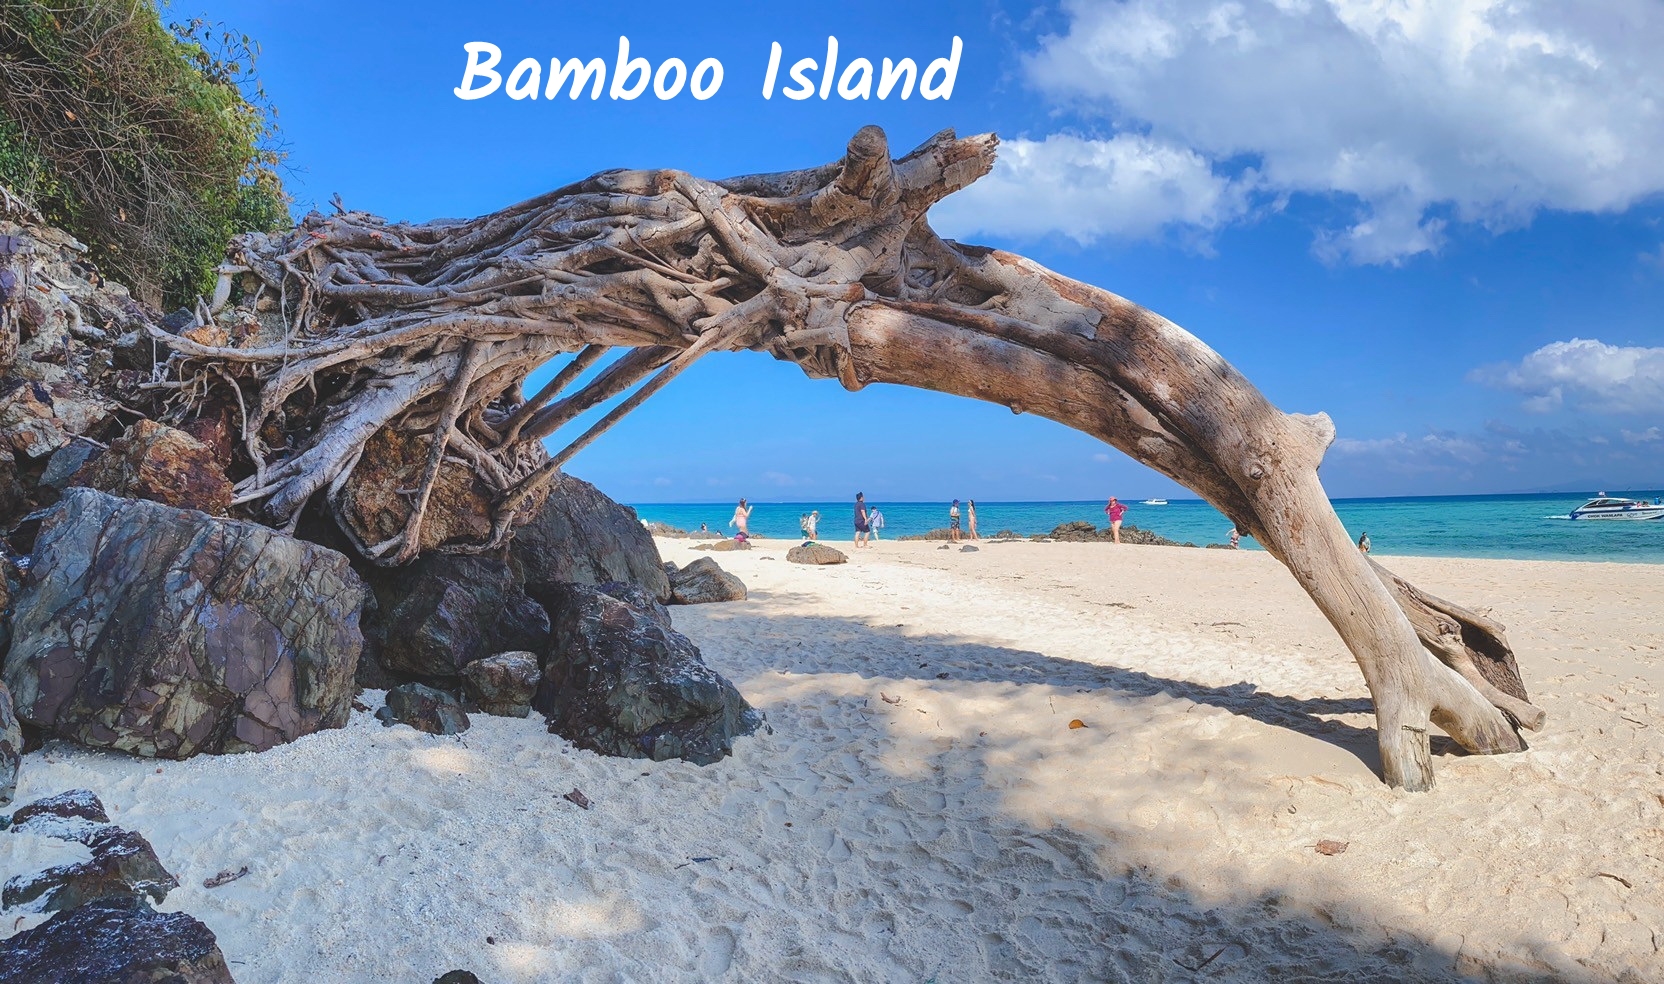 PHI PHI + MAYA + BAMBOO ISLAND DAY TRIP BY SPEEDBOAT